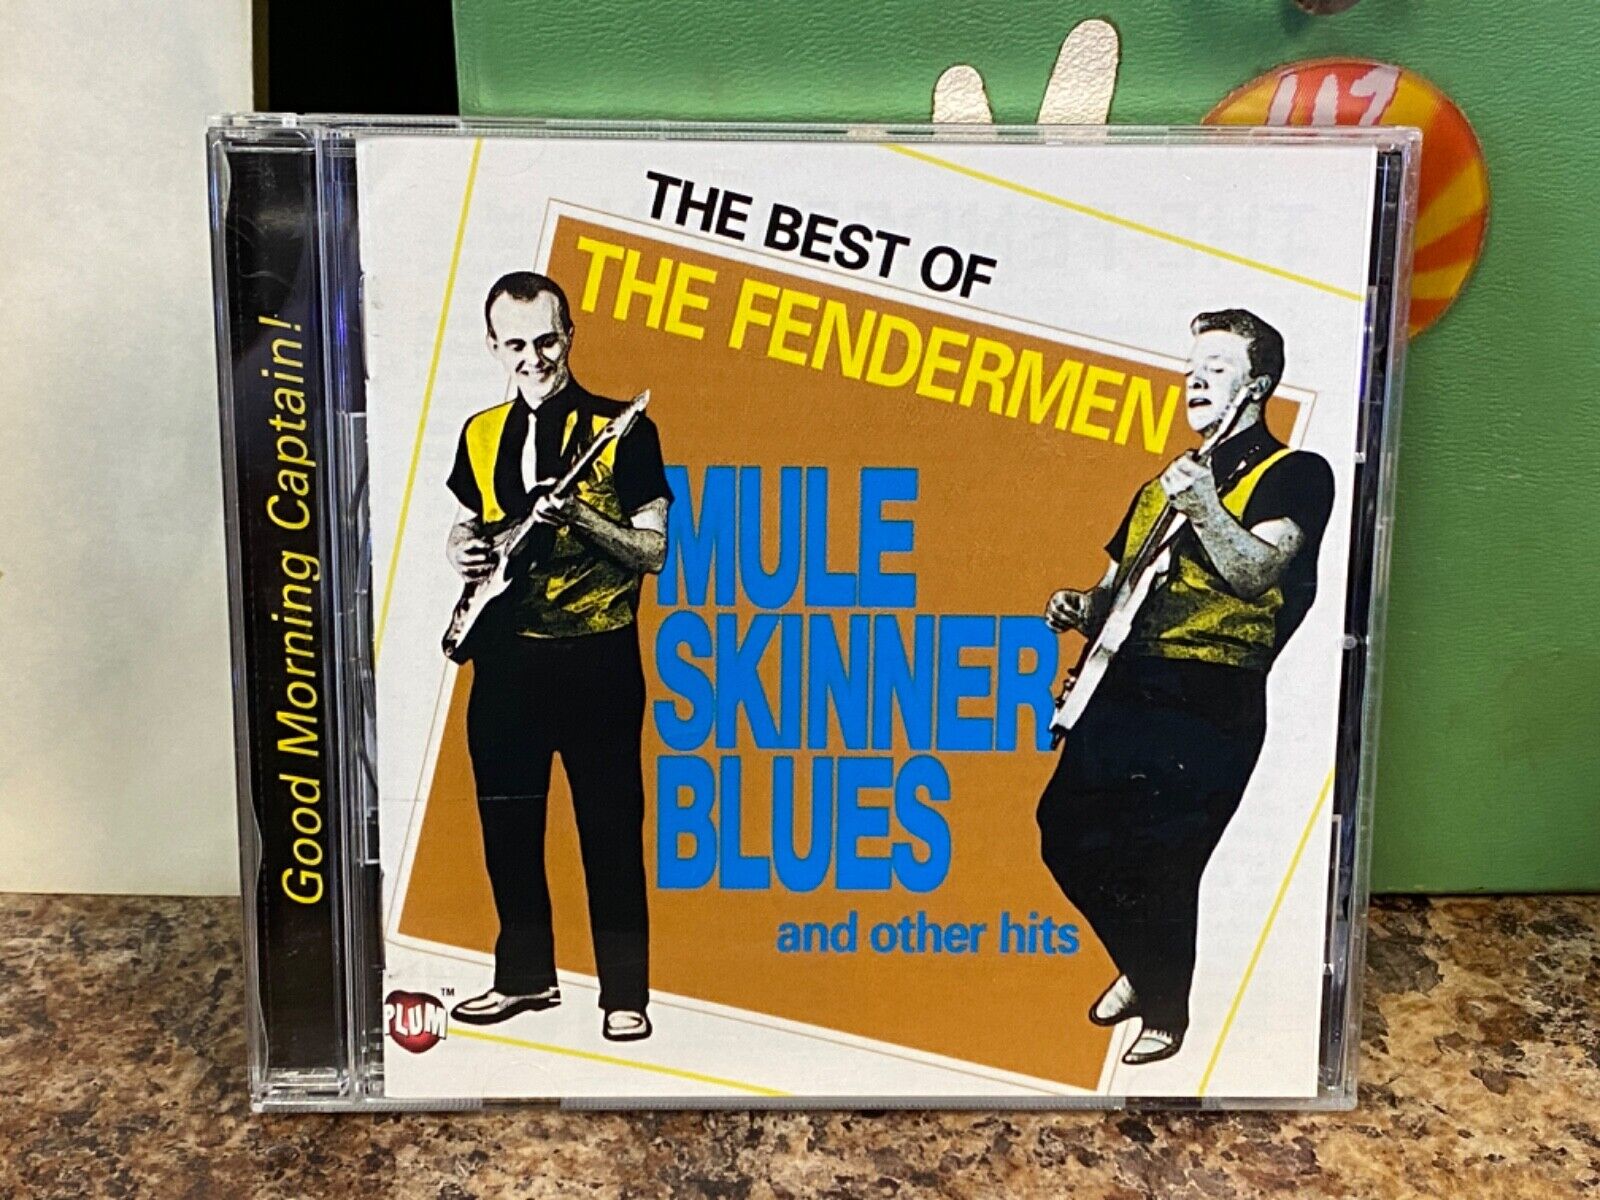 The Fendermen ‎– The Best of CD Plum 1999 [rockabilly] VG+ [Mule Skinner Blues]